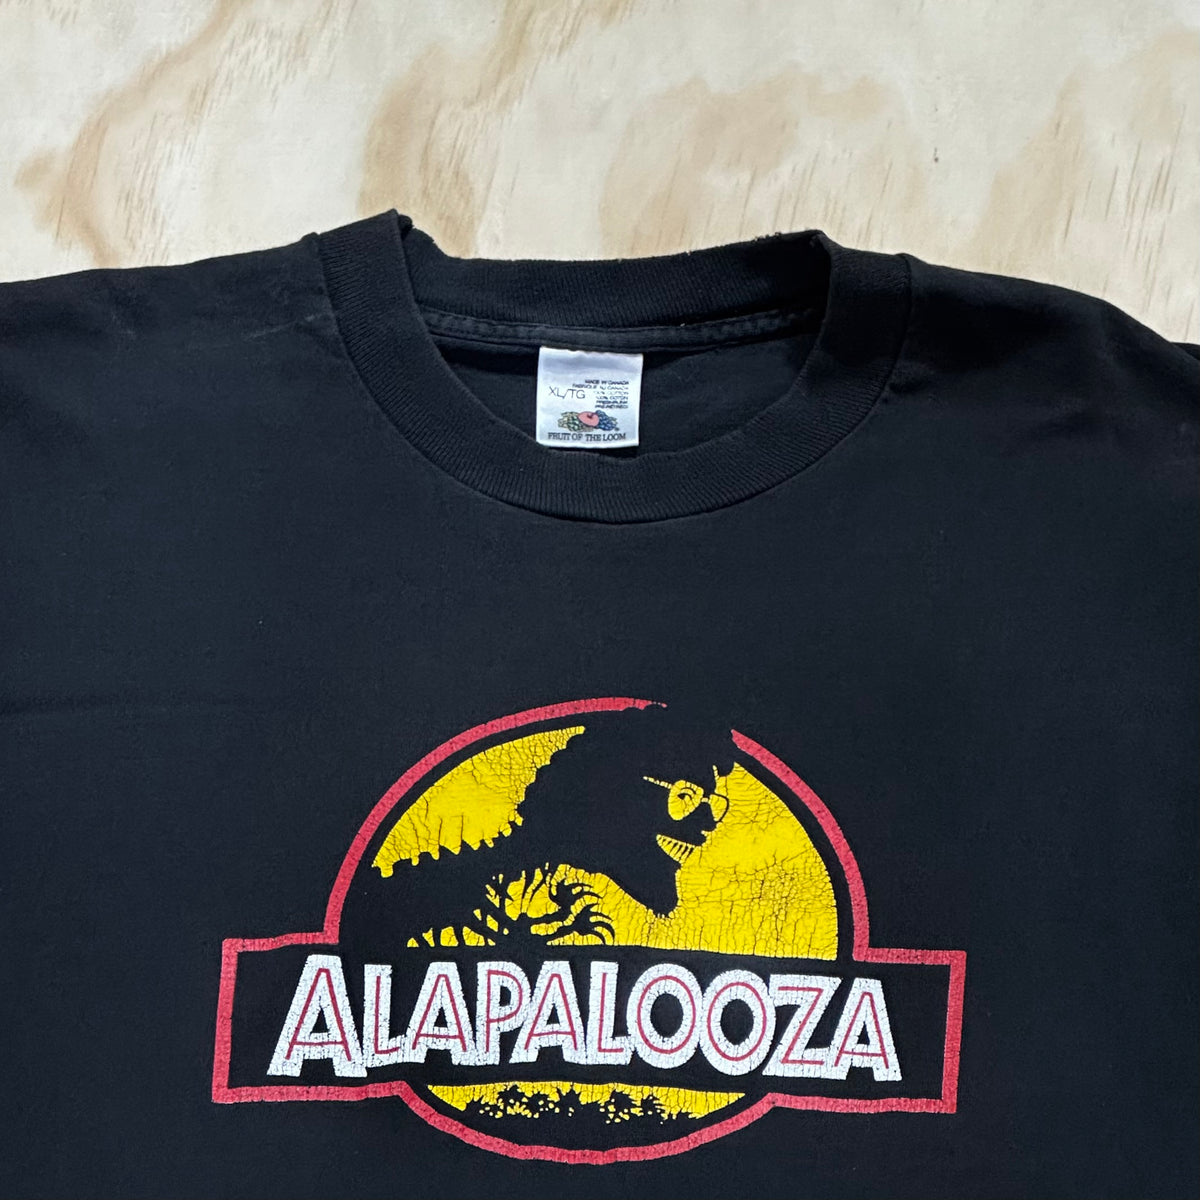 Vintage 90s Weird Al Yankovic 1994 Alapalooza Band Tour T-Shirt